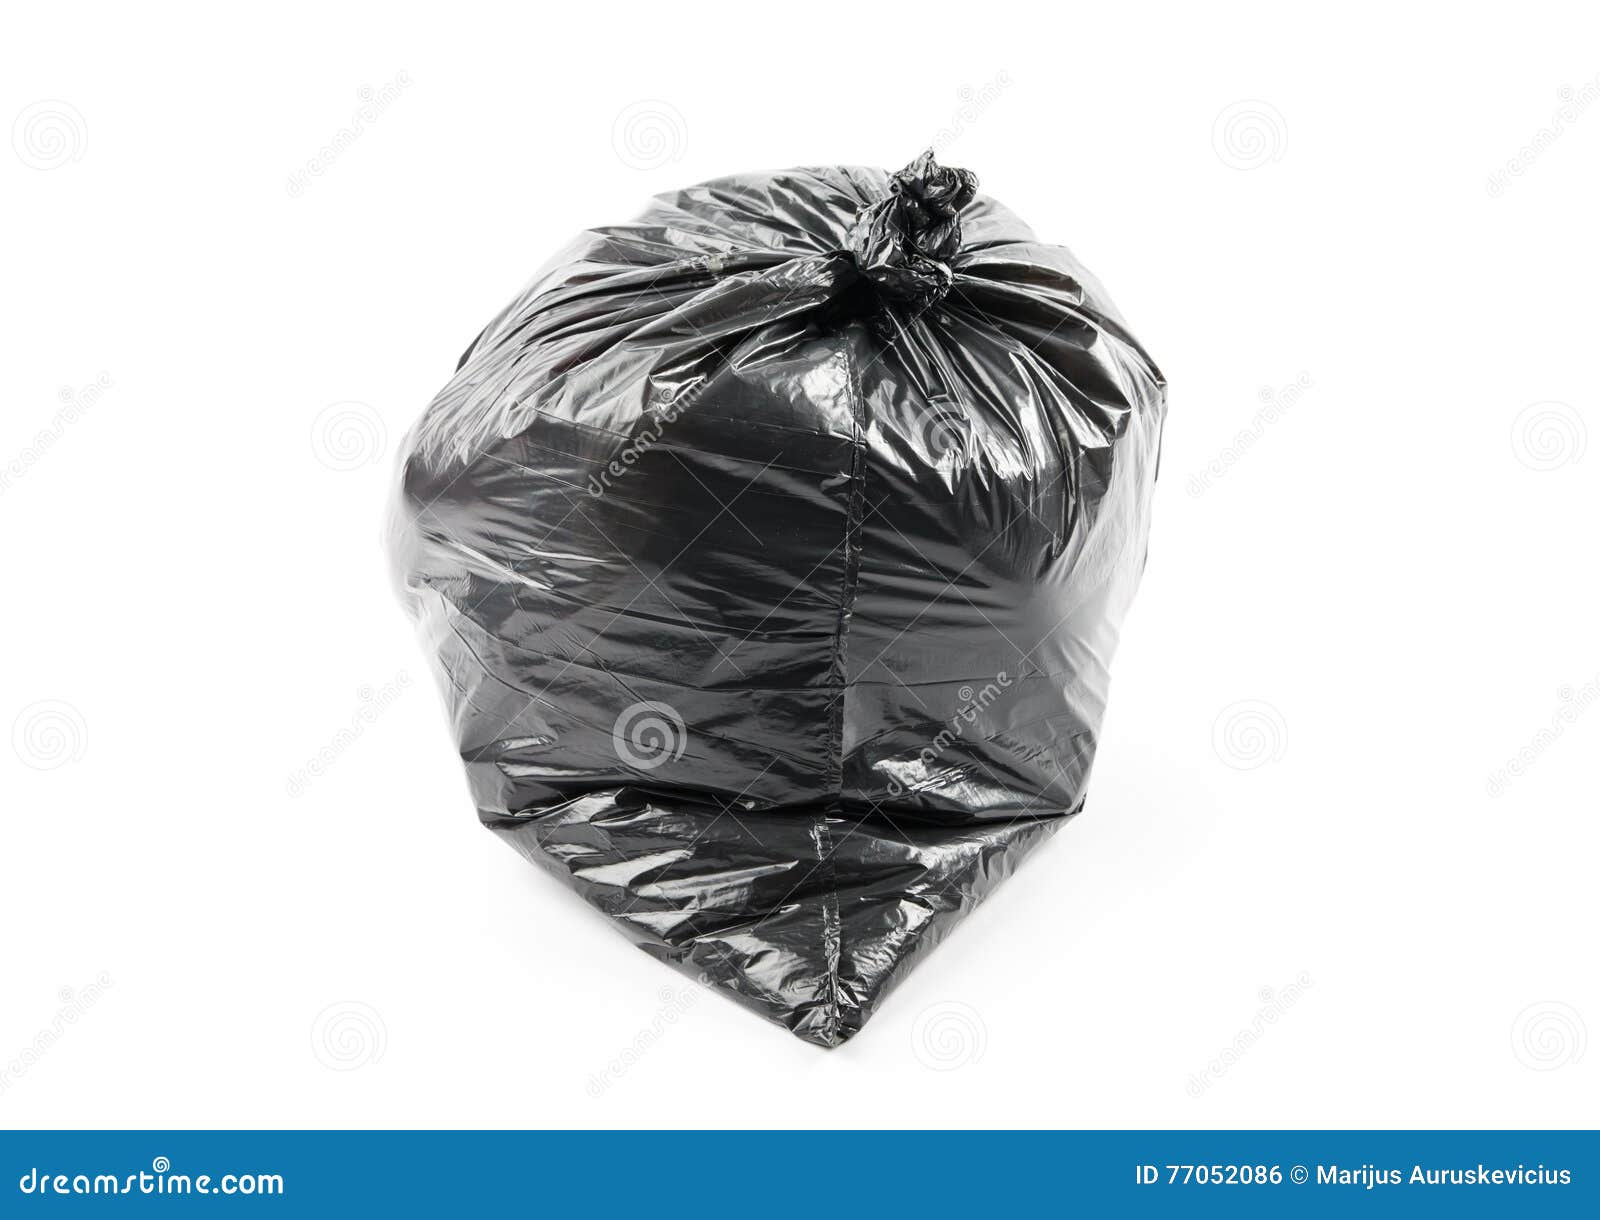 Black garbage bag stock photo. Image of package, disposal - 77052086